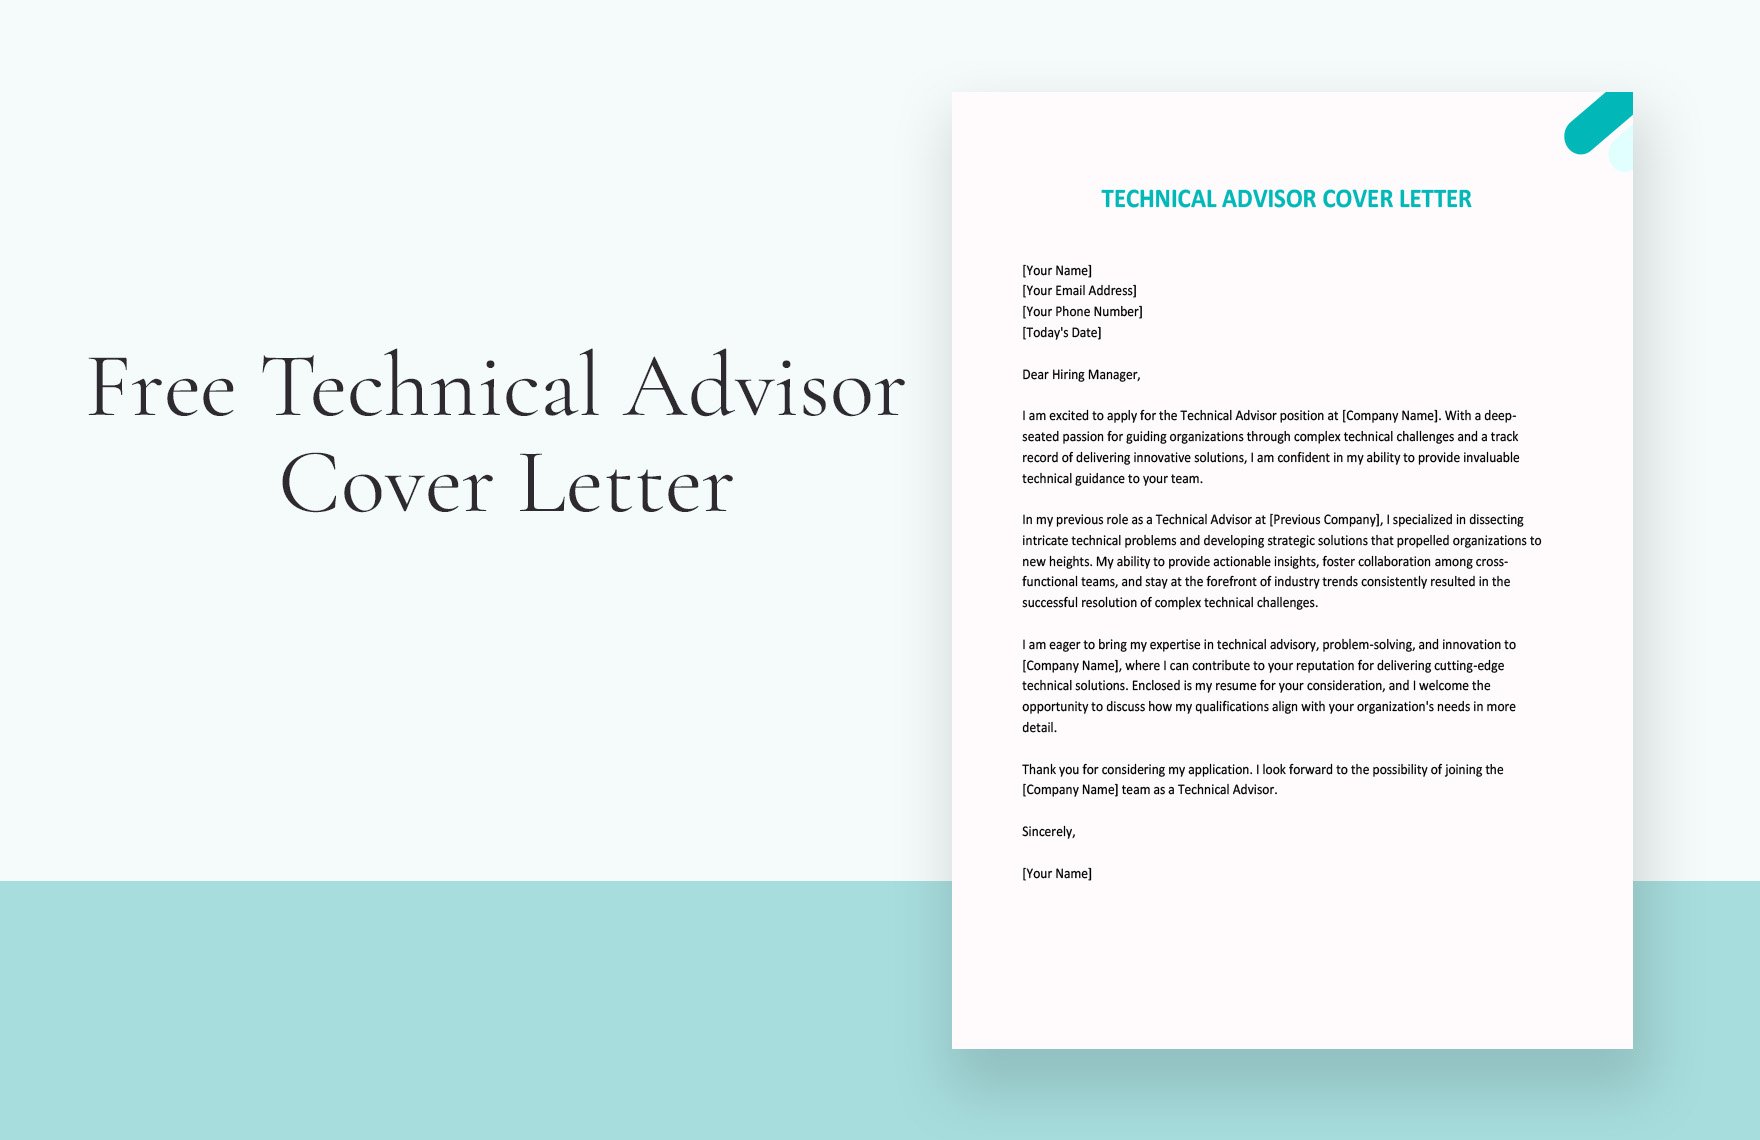 Free Technical Advisor Cover Letter in Word, Google Docs